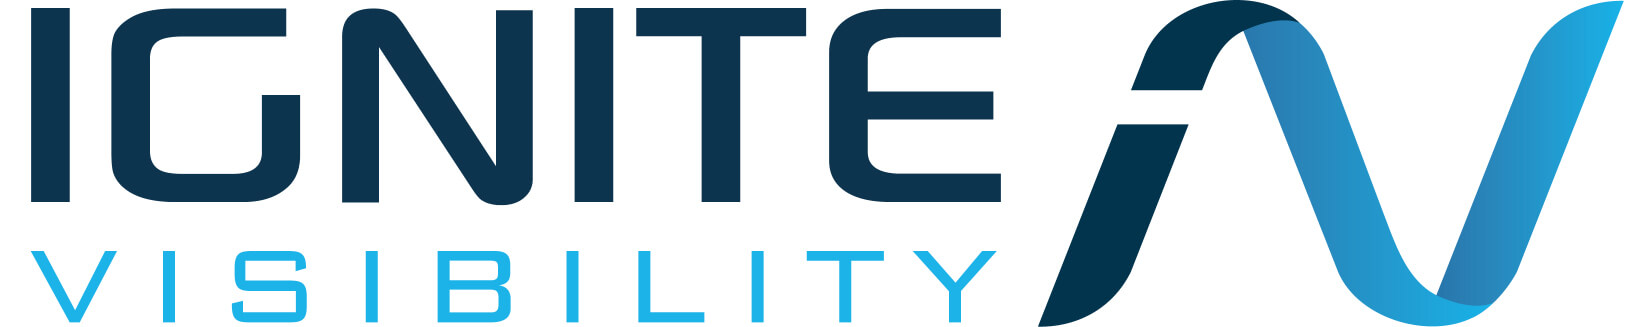 Best Corporate SEO Company Logo: Ignite Visibility